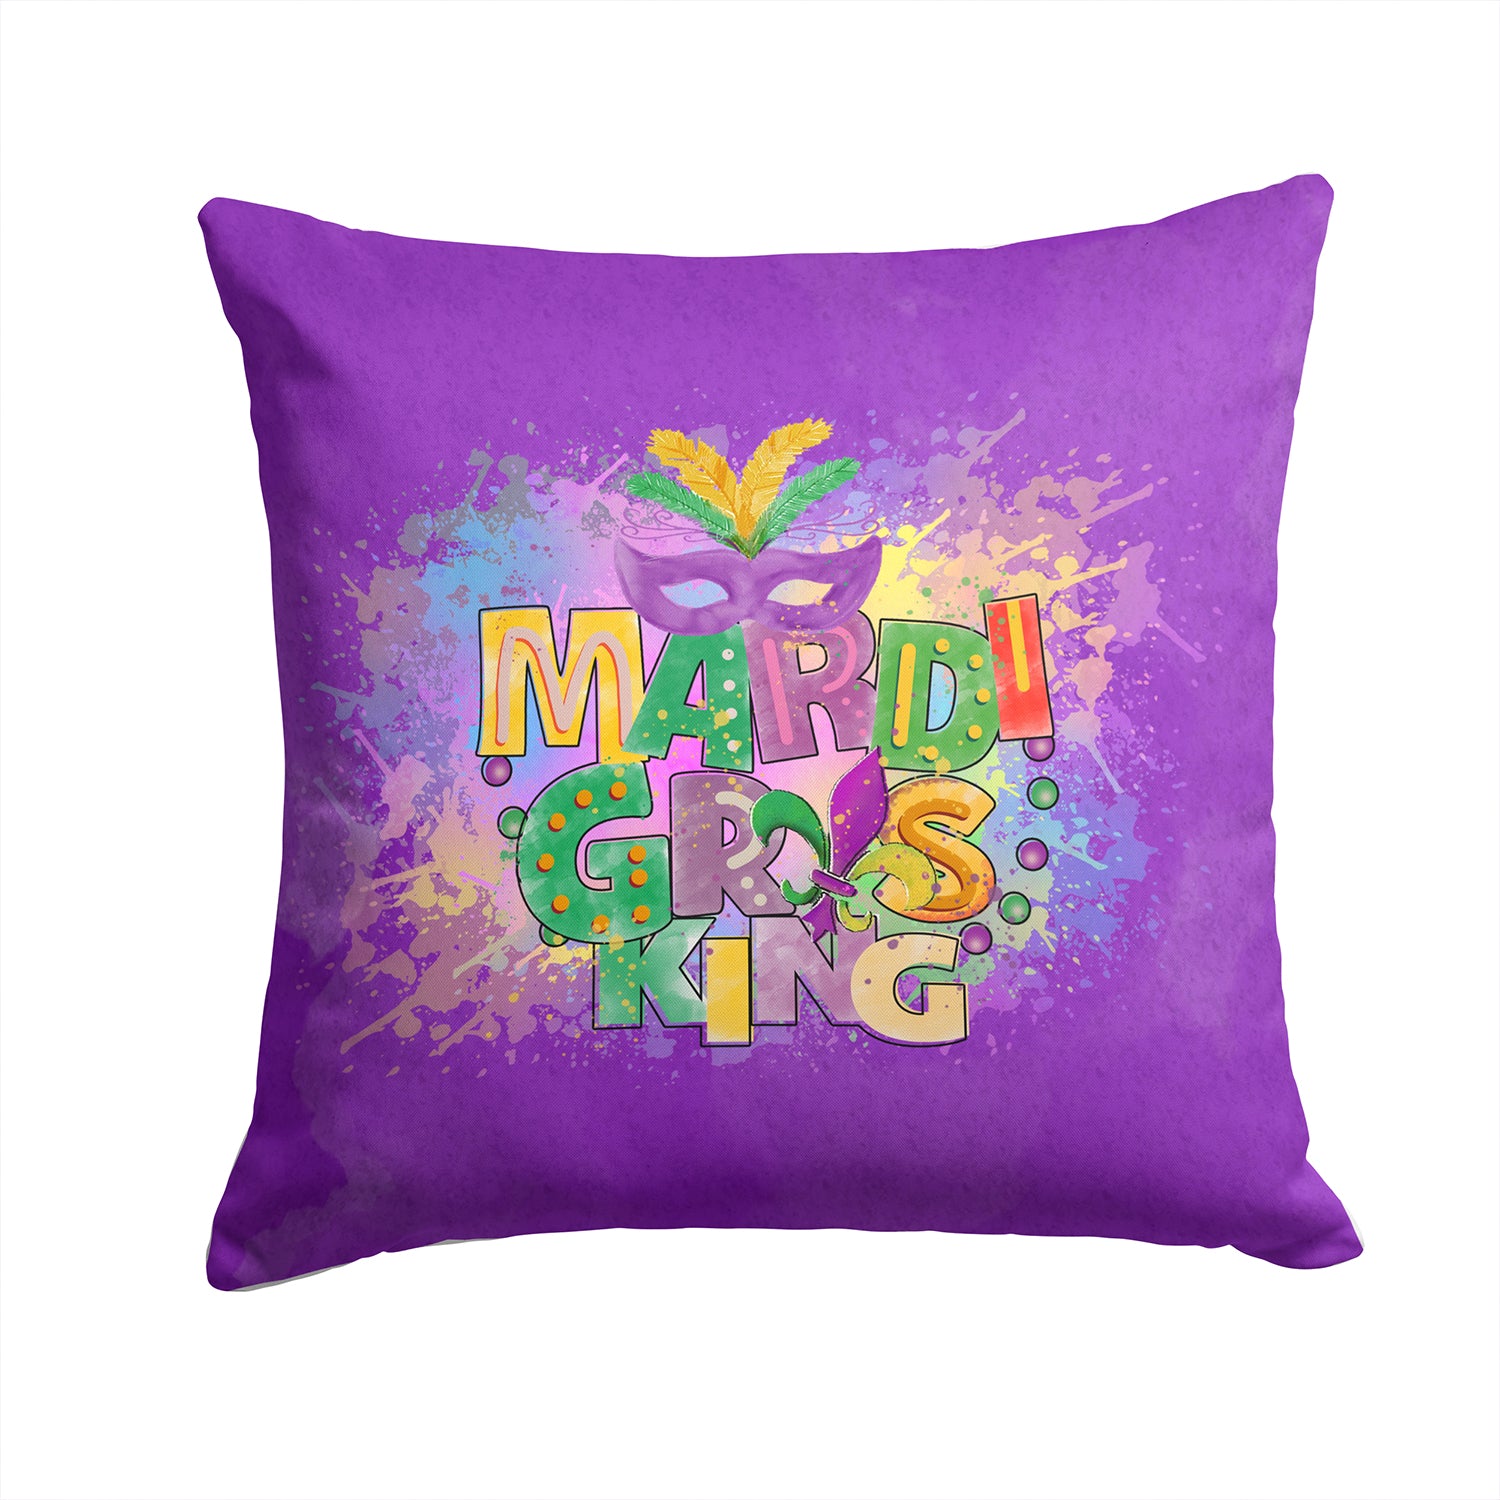 Buy this Mardi Gras King Fabric Decorative Pillow